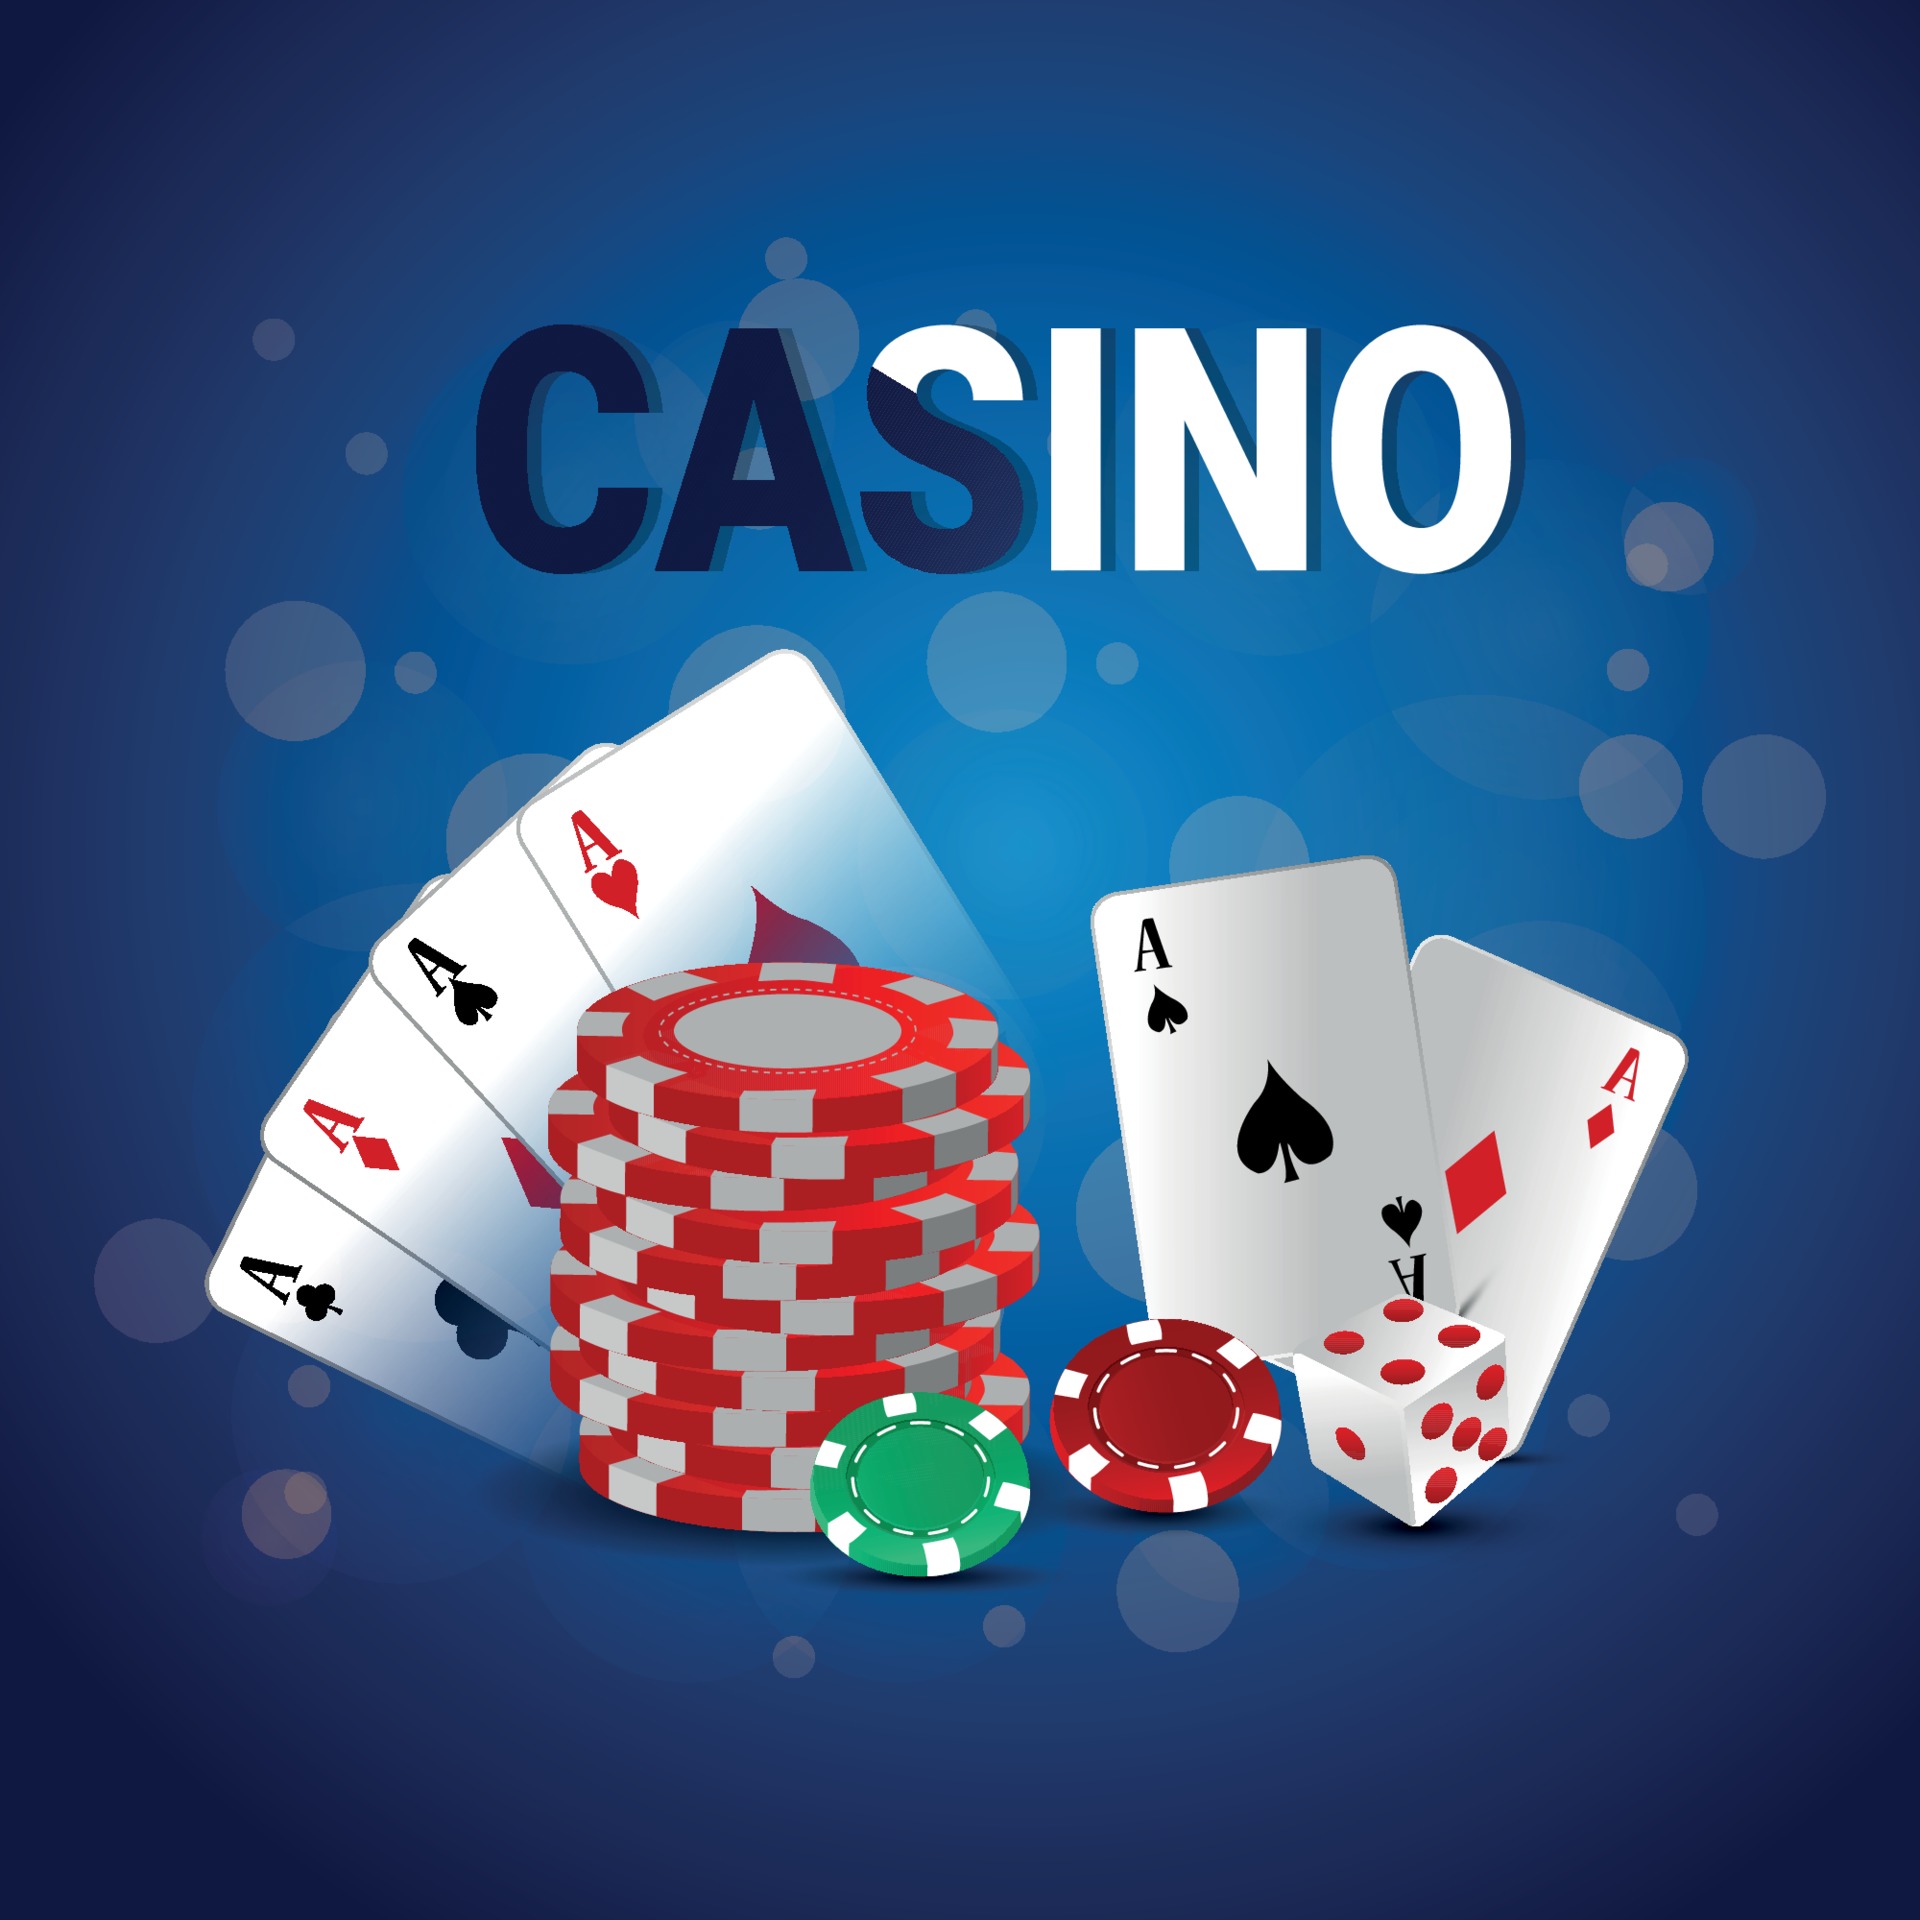 Use Advanced Poker Skills To Win Online